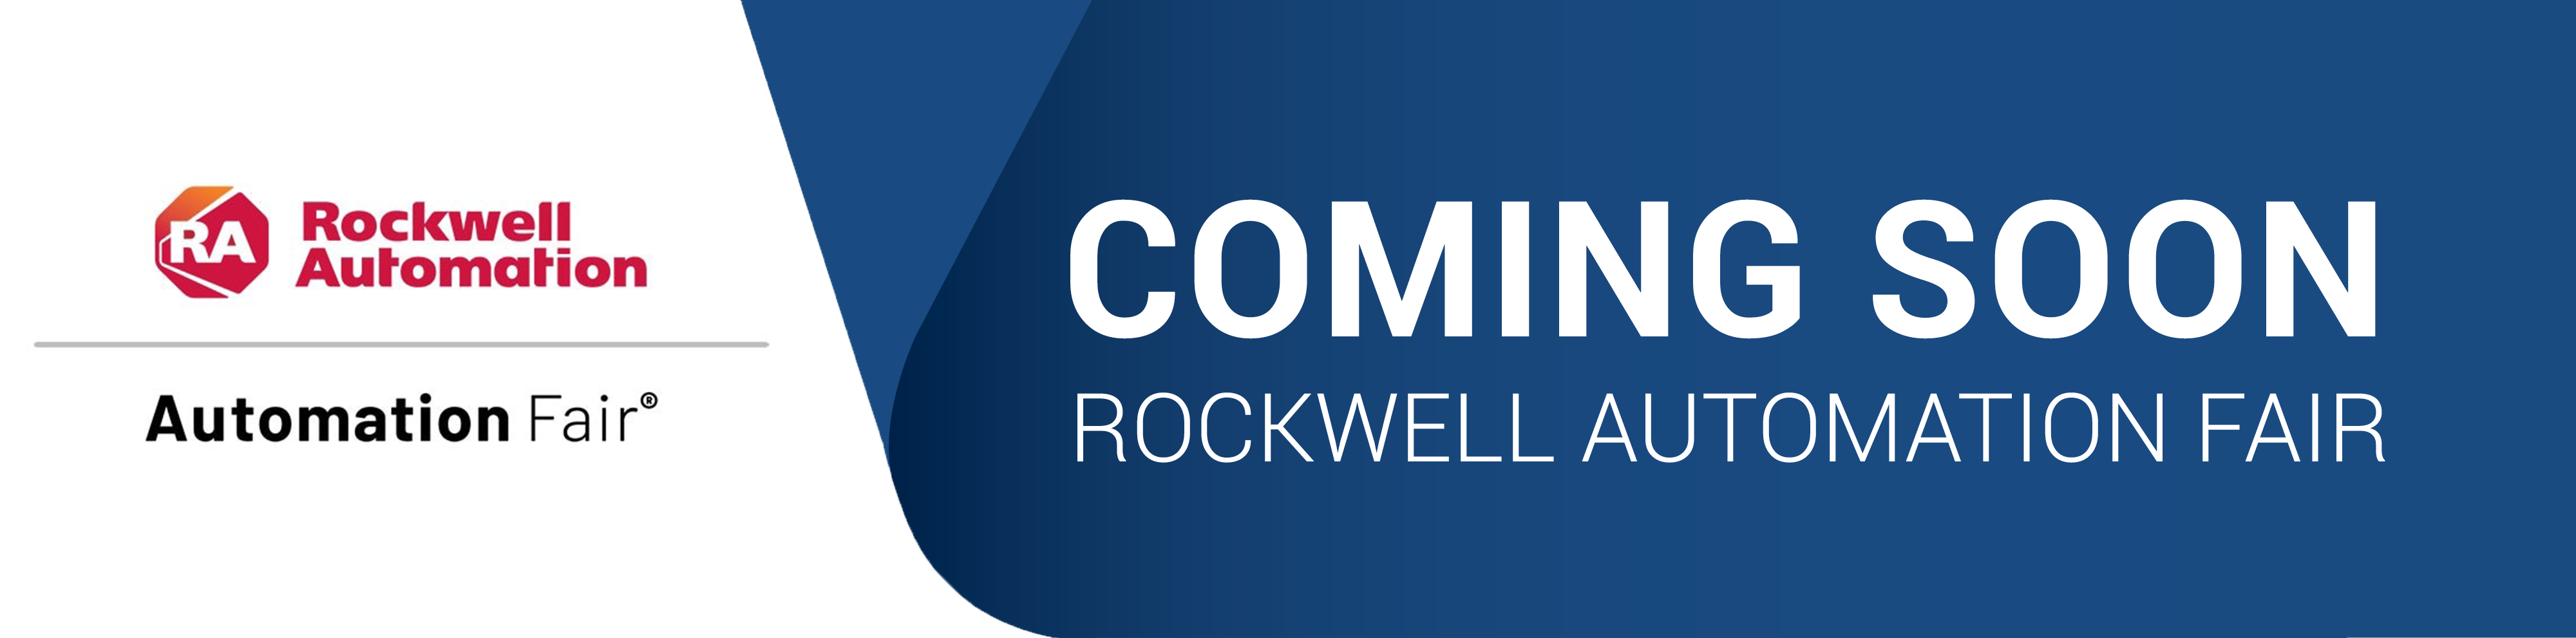 Rockwell Automation Fair 2019